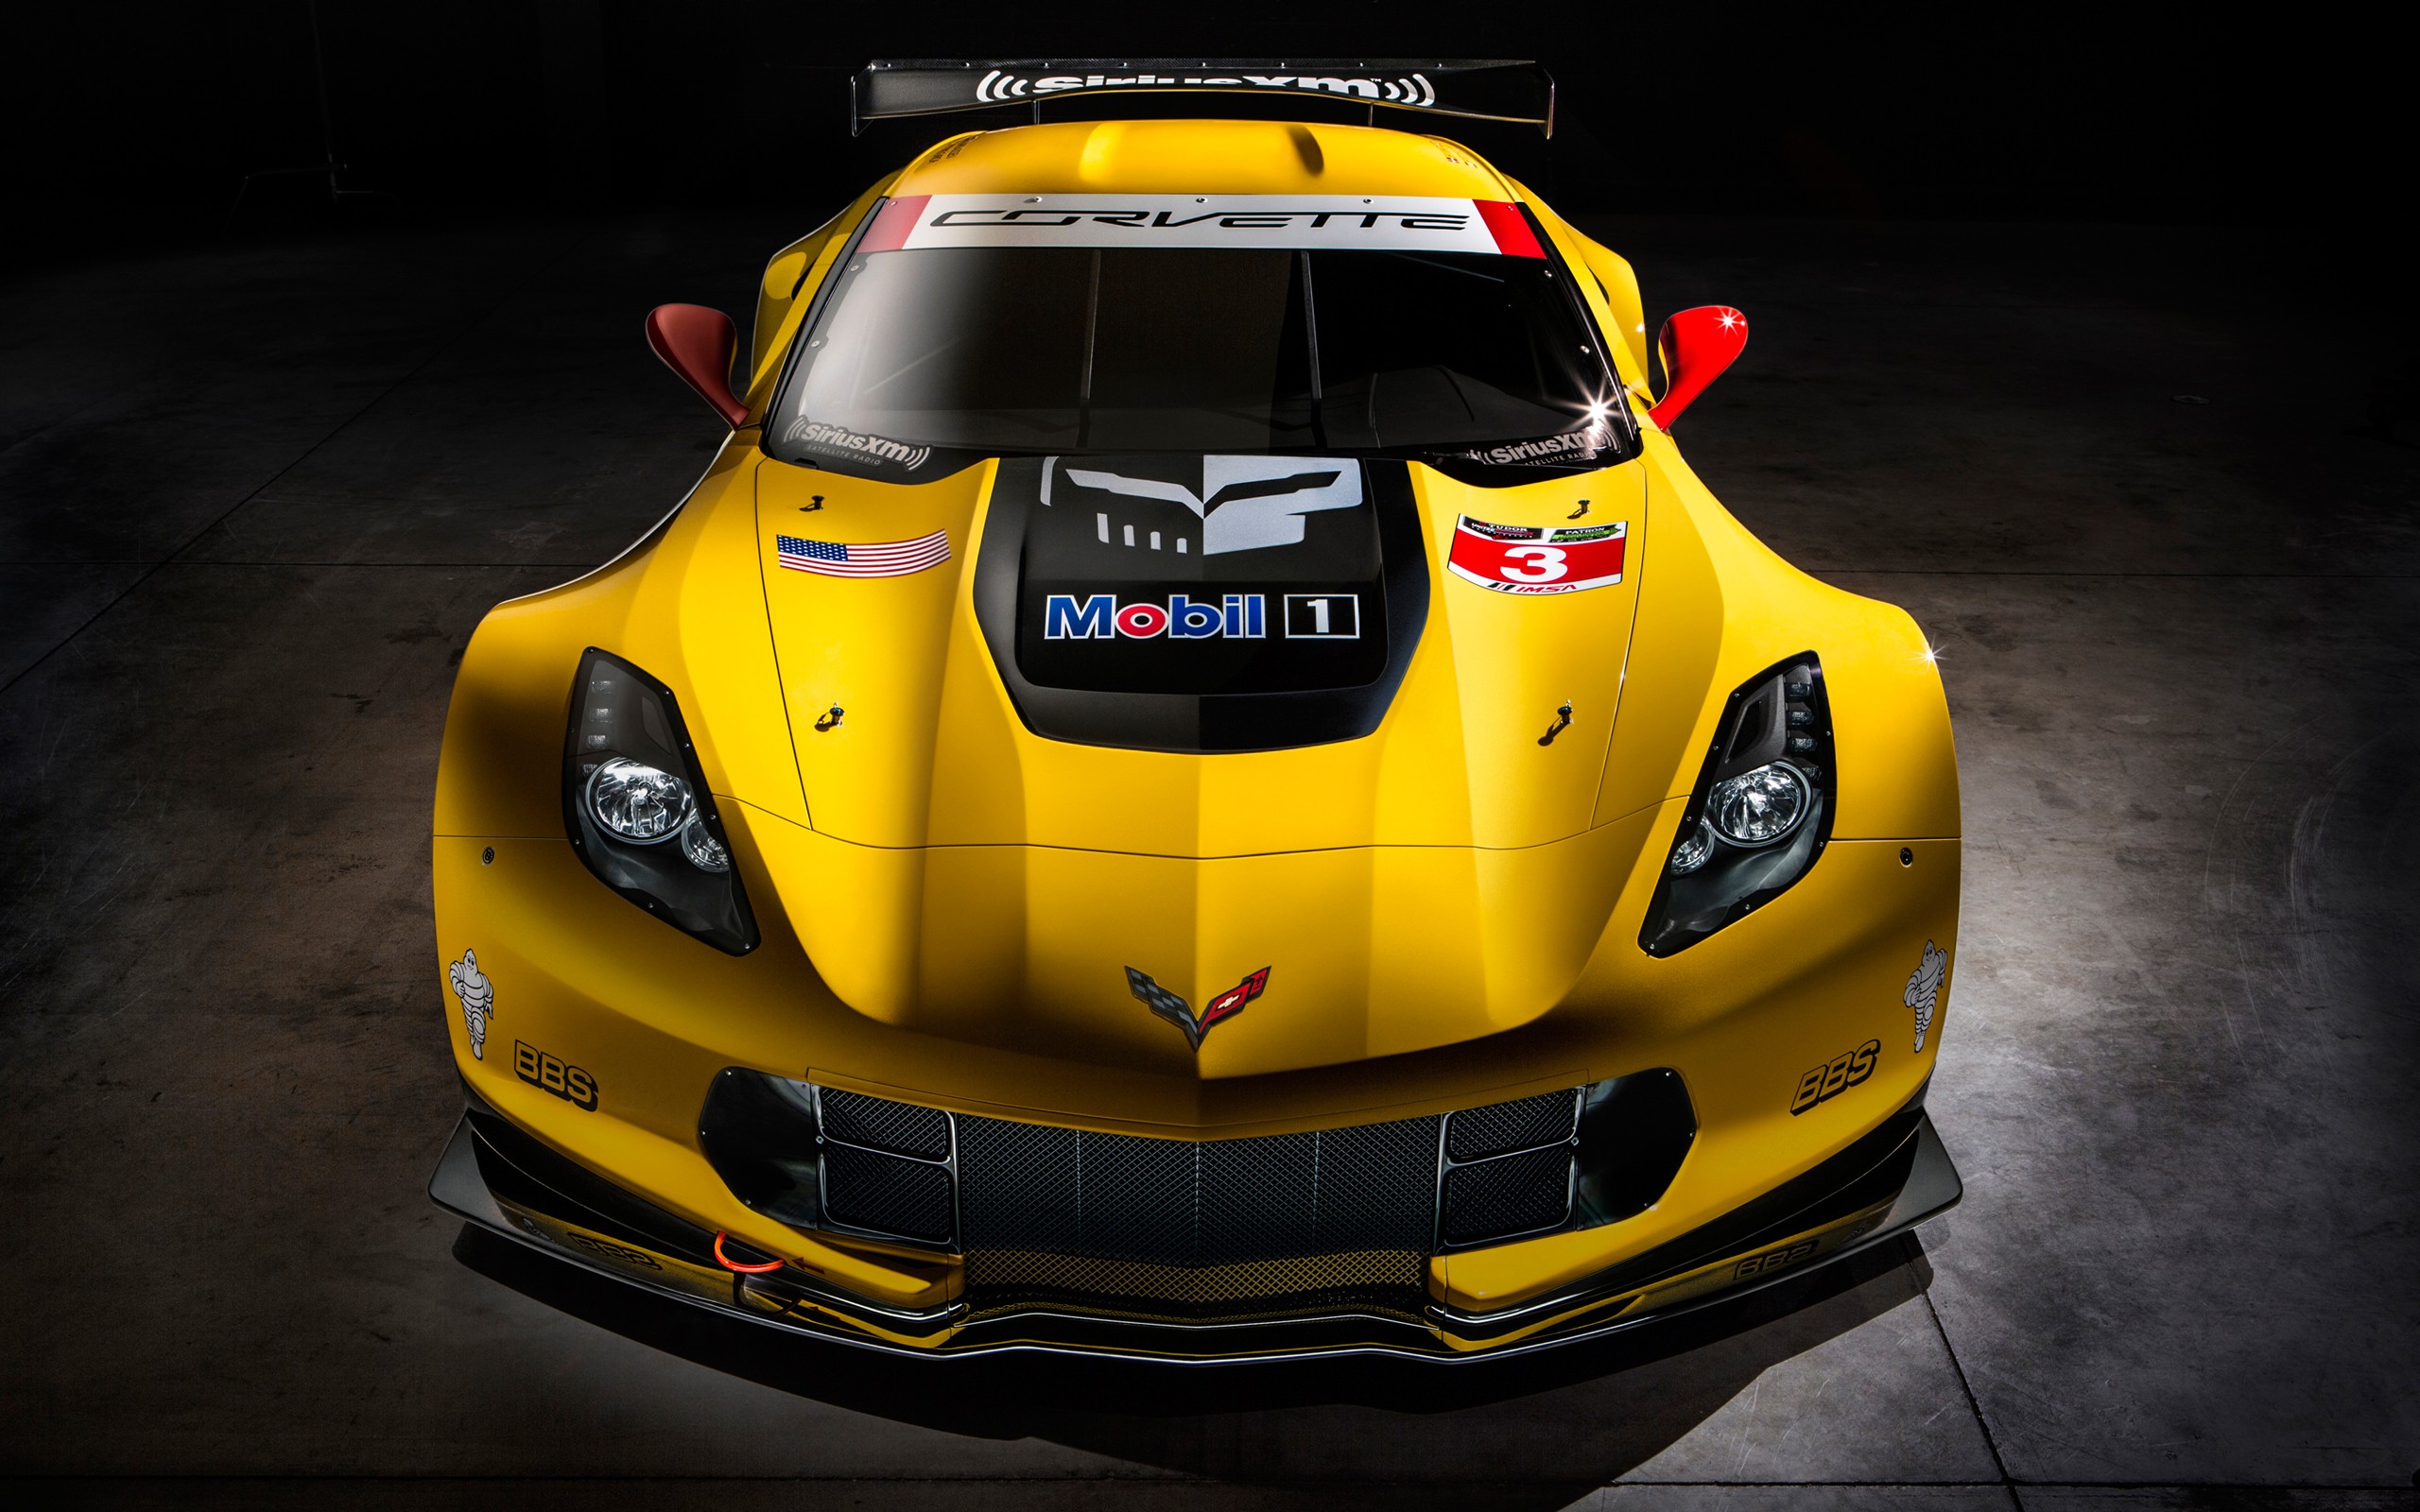 General 2560x1600 car vehicle yellow cars race cars Corvette